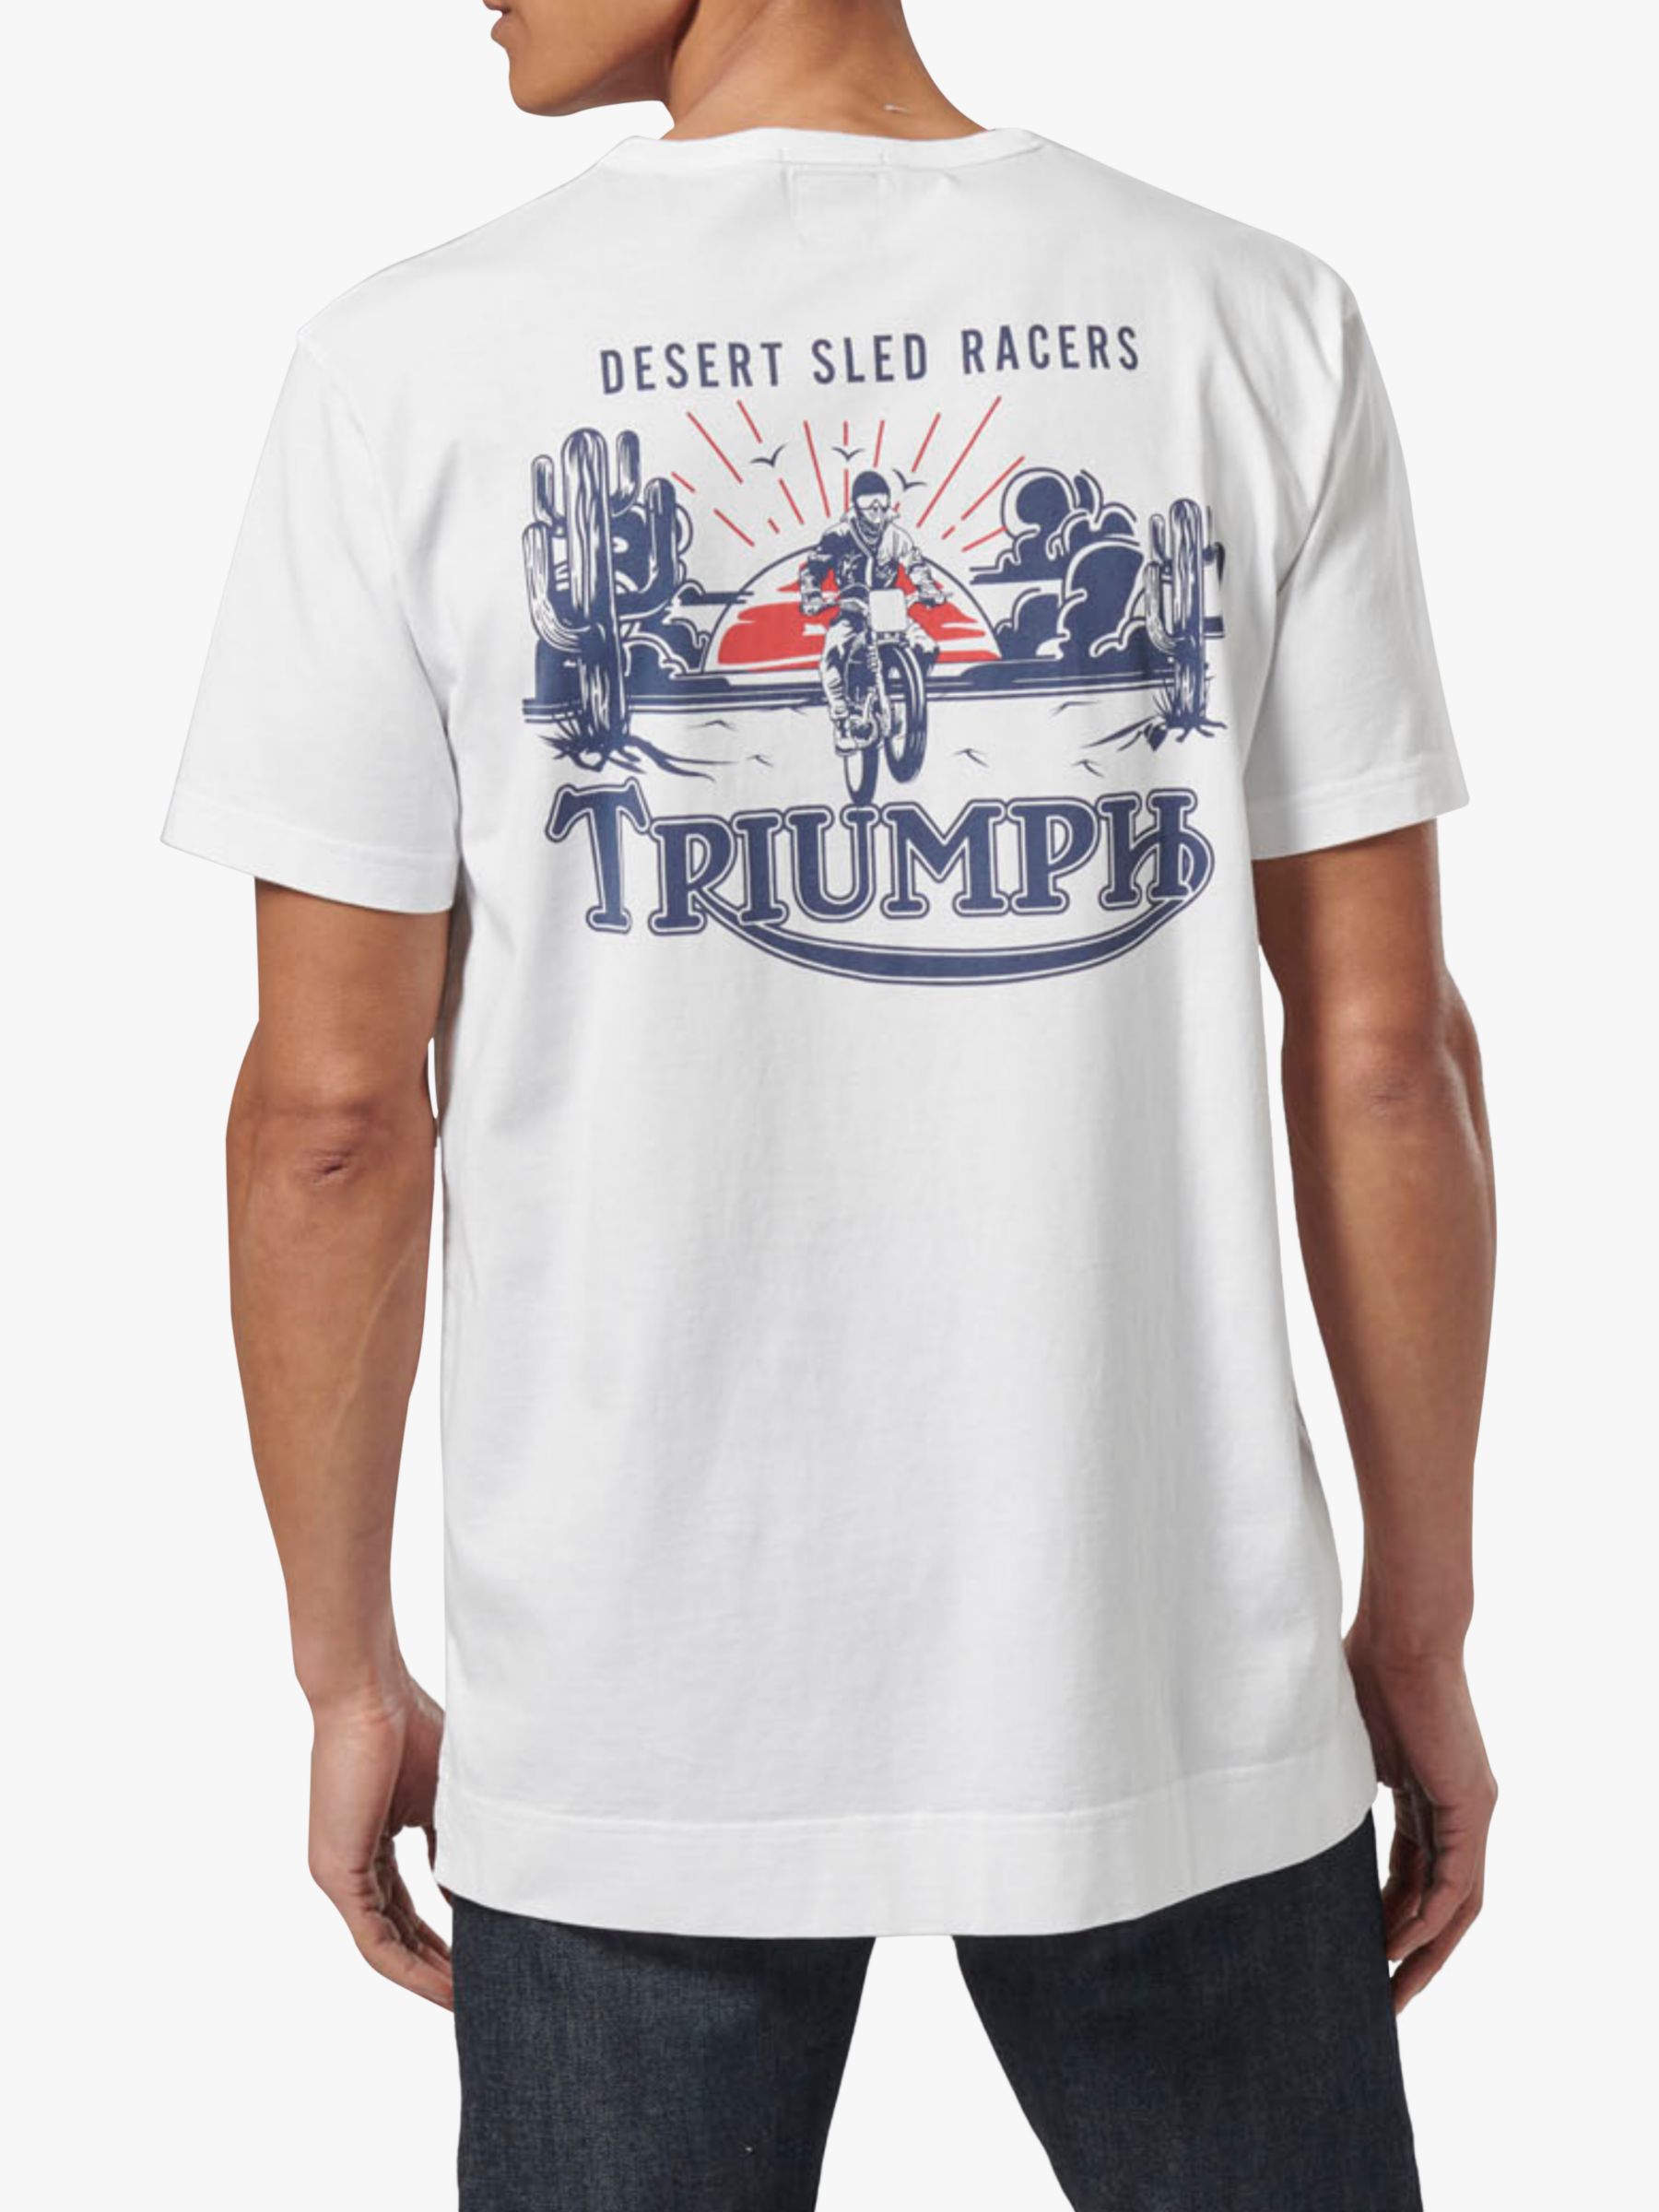 Triumph Motorcycles Sled Print T-Shirt, White, M